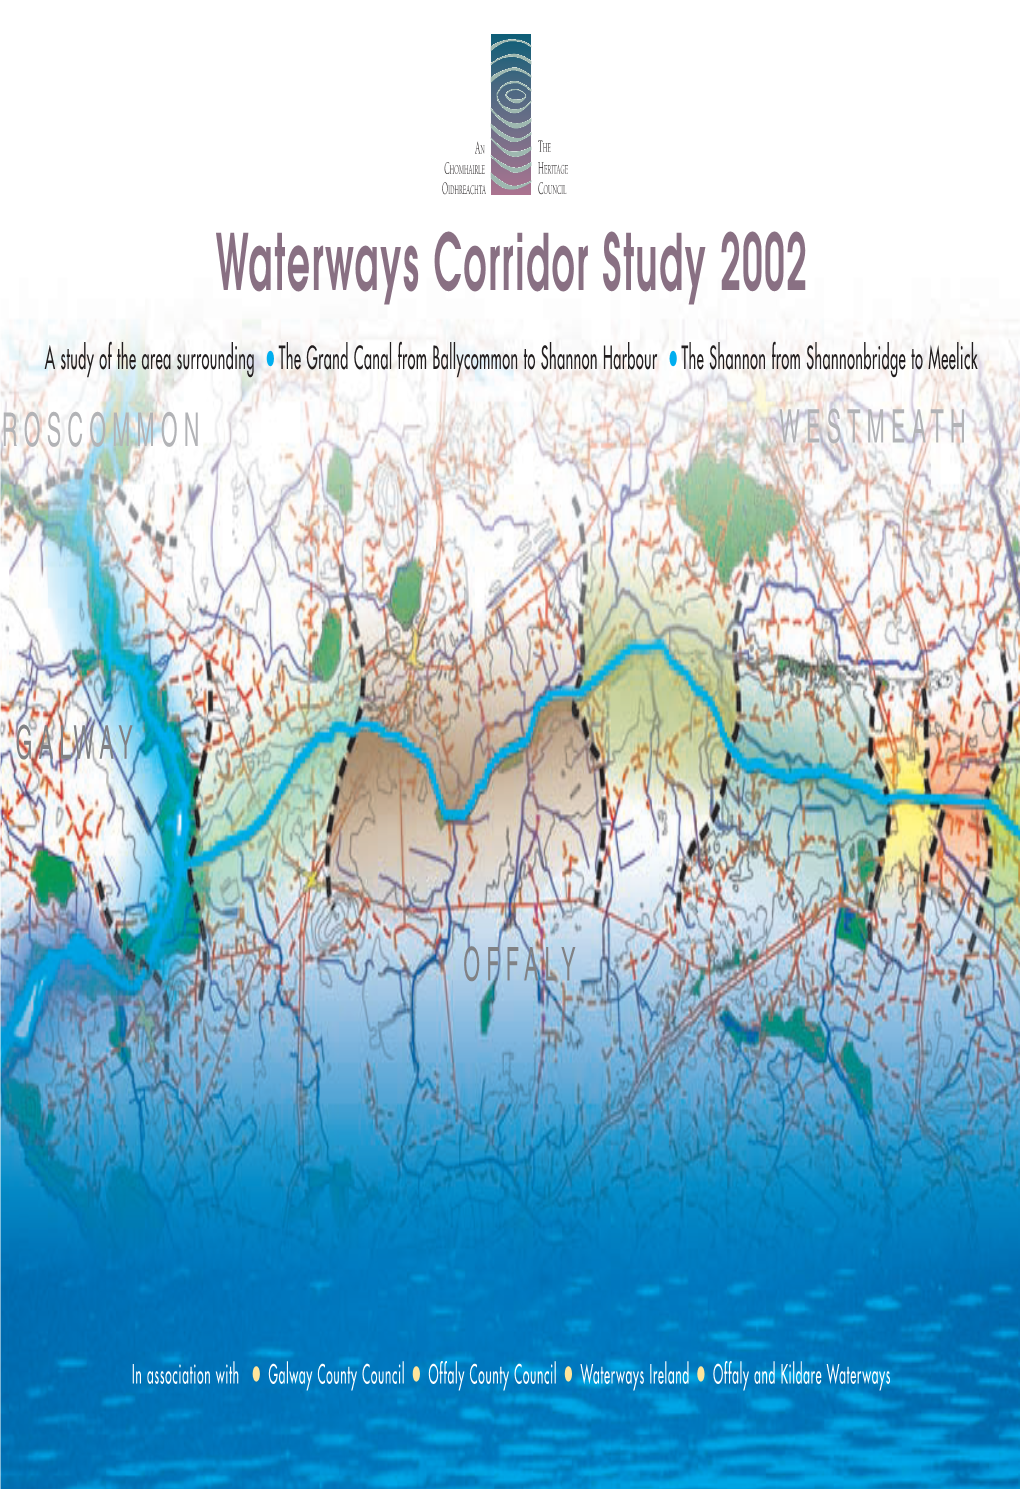 Waterway Corridor Study Shannon Shannonbridge